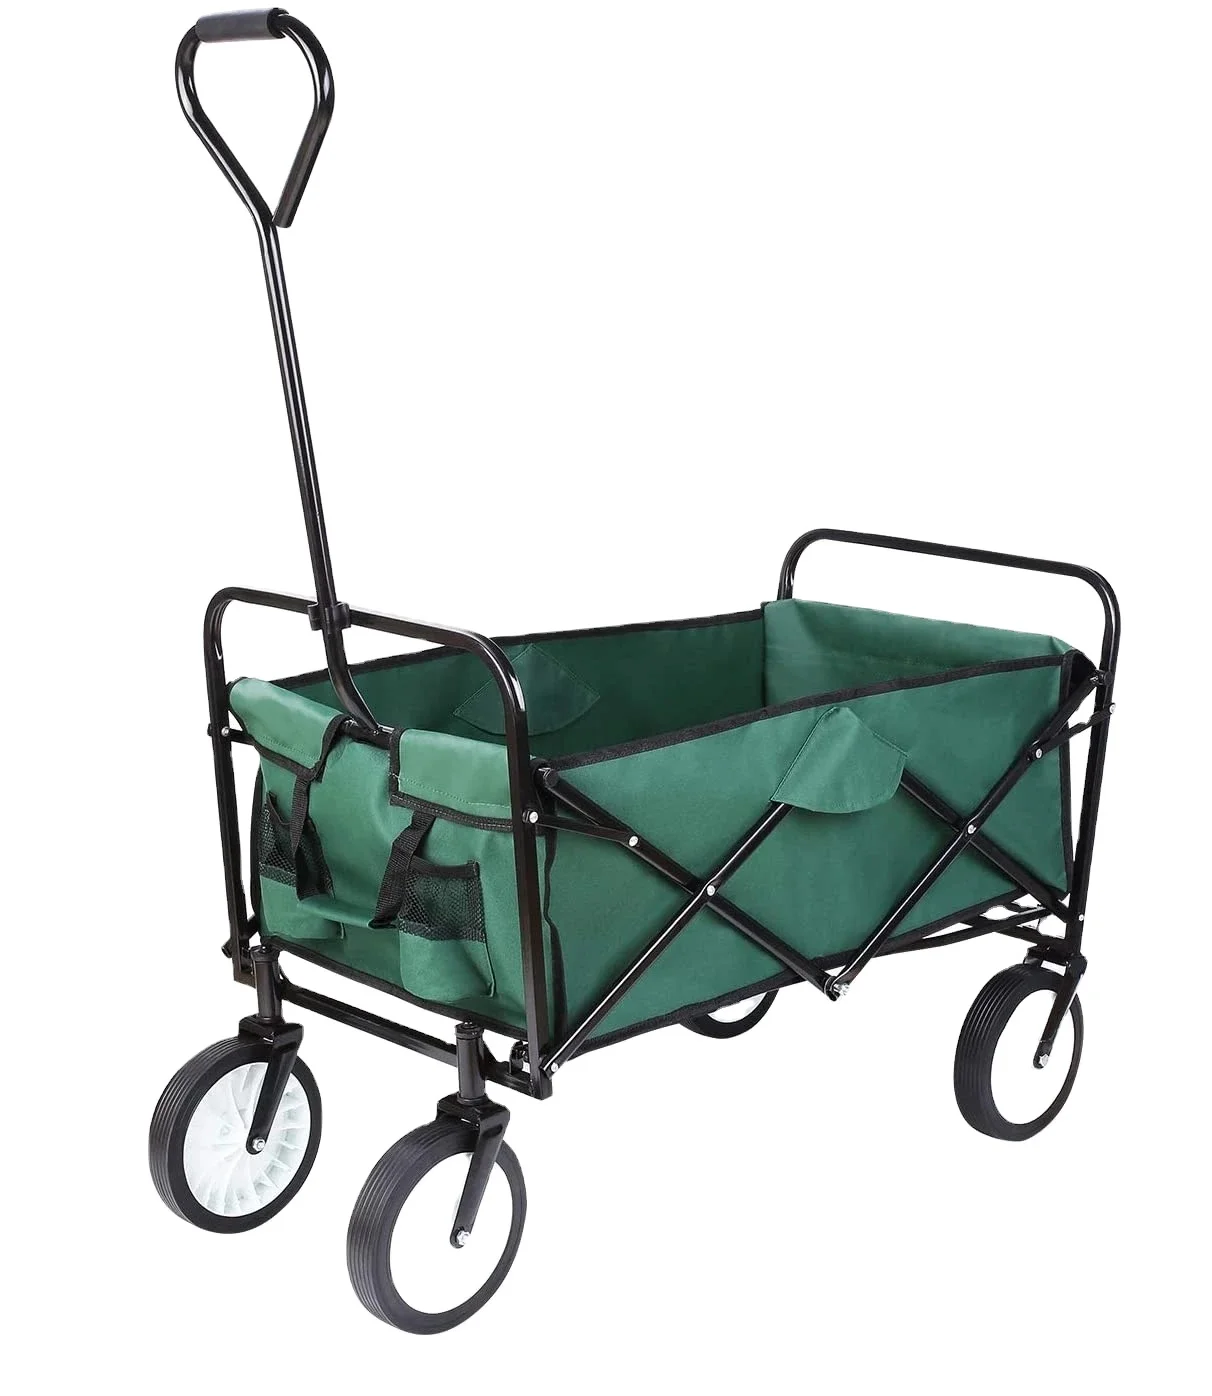 Folding Wagon Cart Utility Outdoor Camping Beach Cart with Universal Wide Wheels Outdoor Camping Shopping Cart Garden